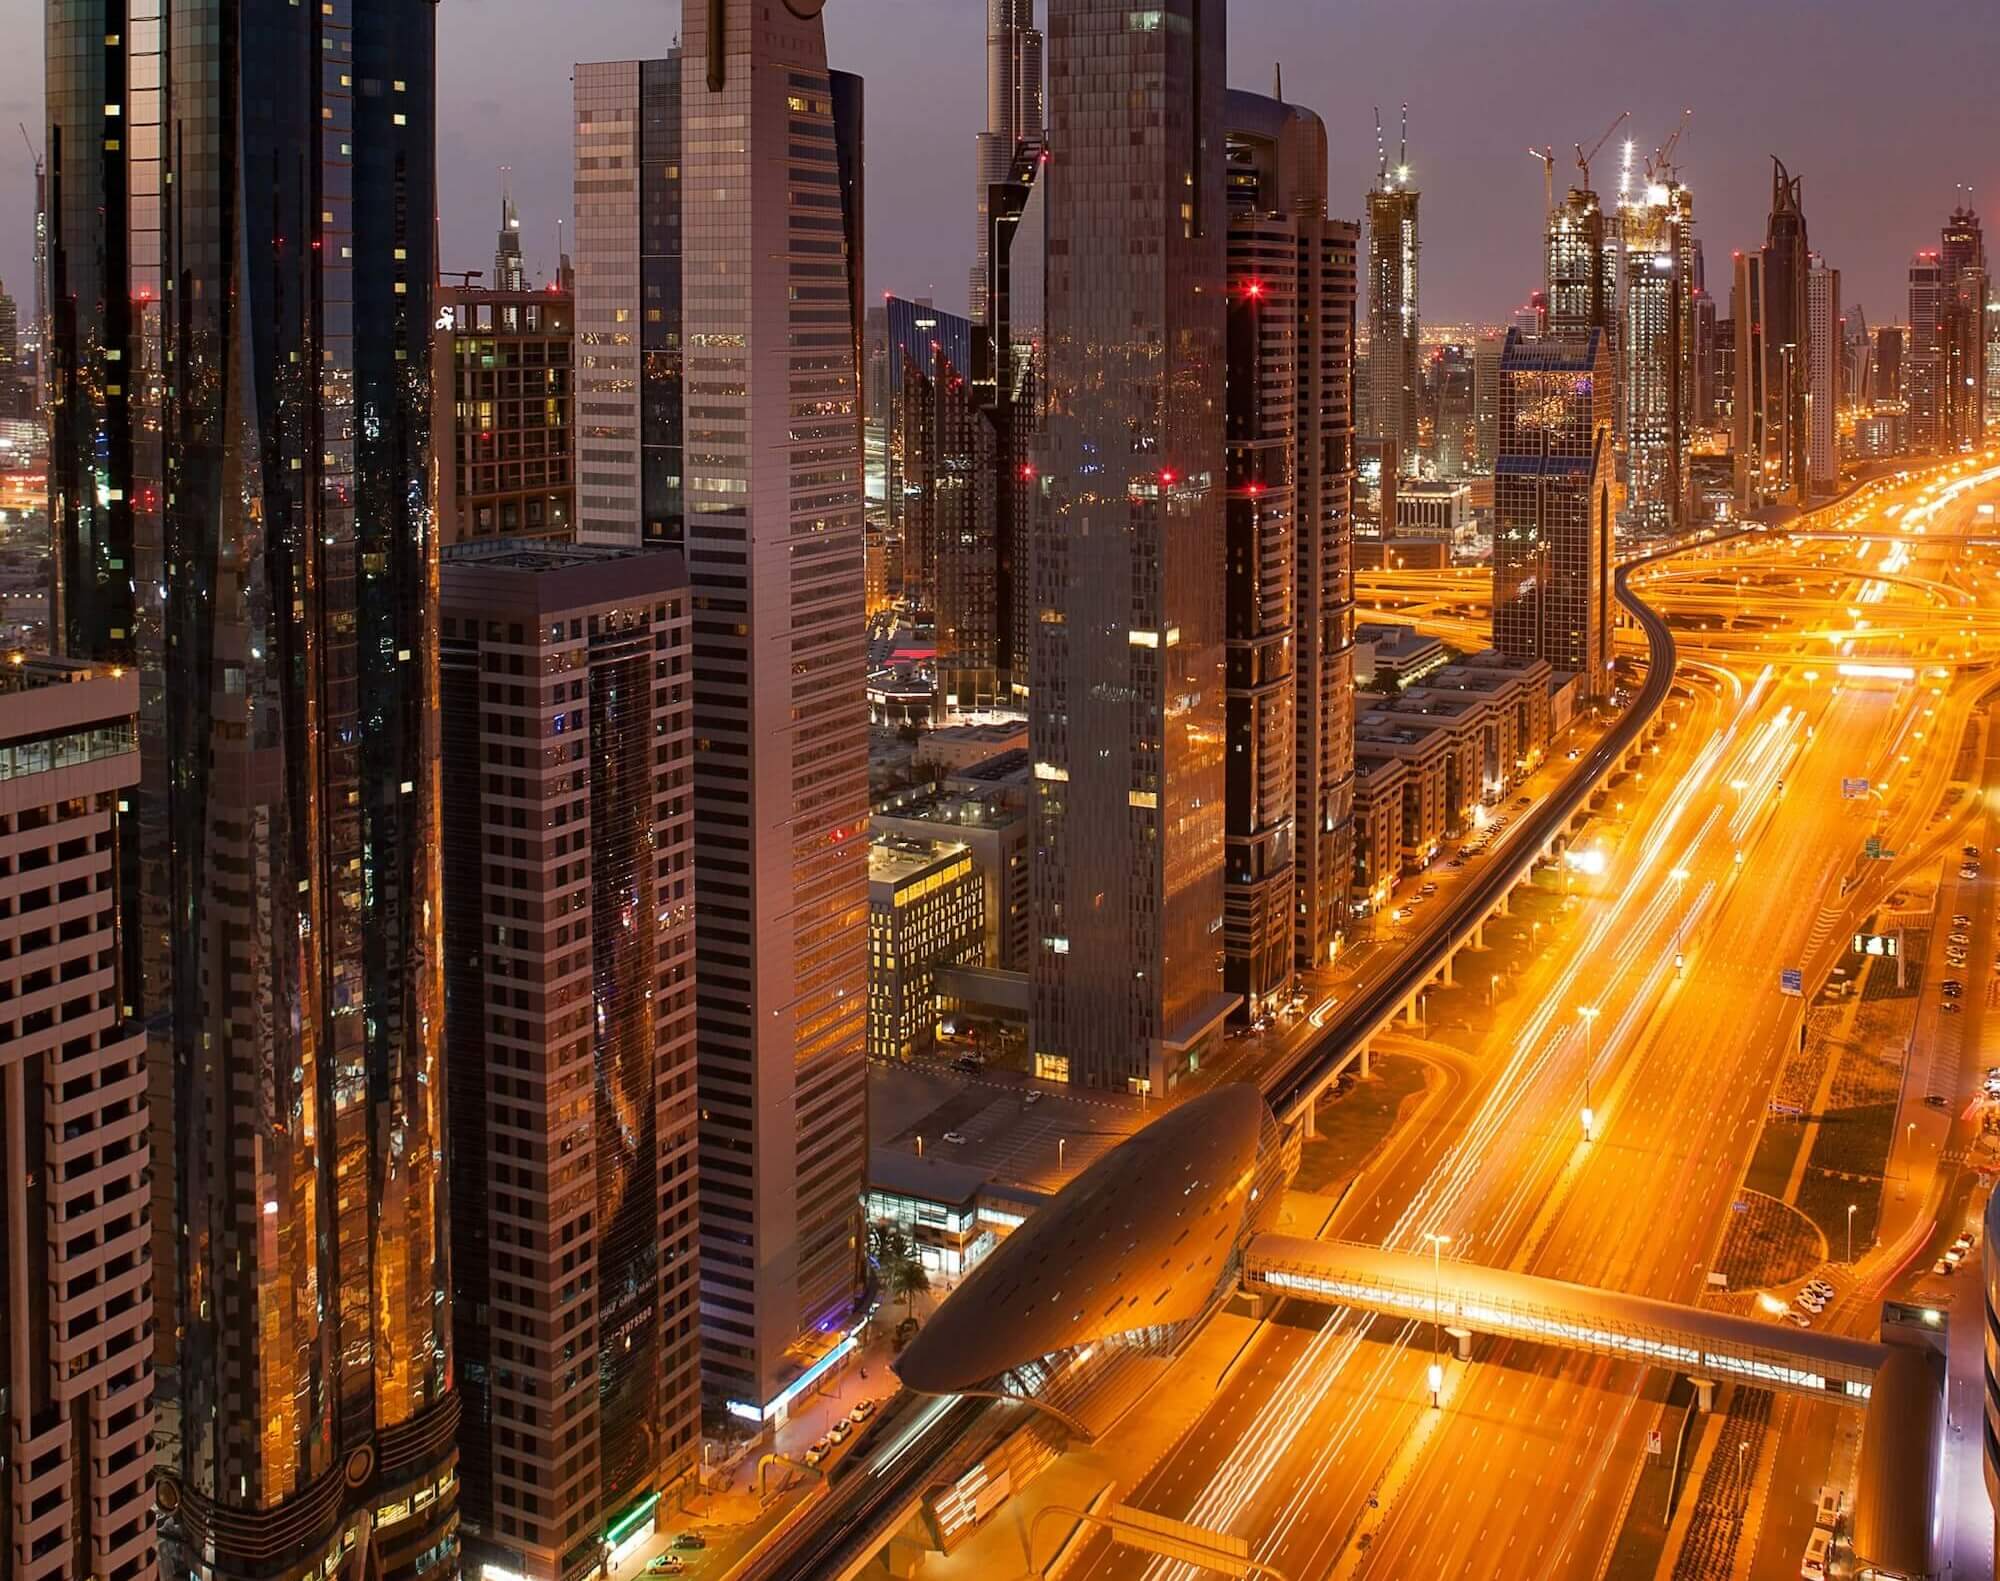 Dubai traffic and skyline at night